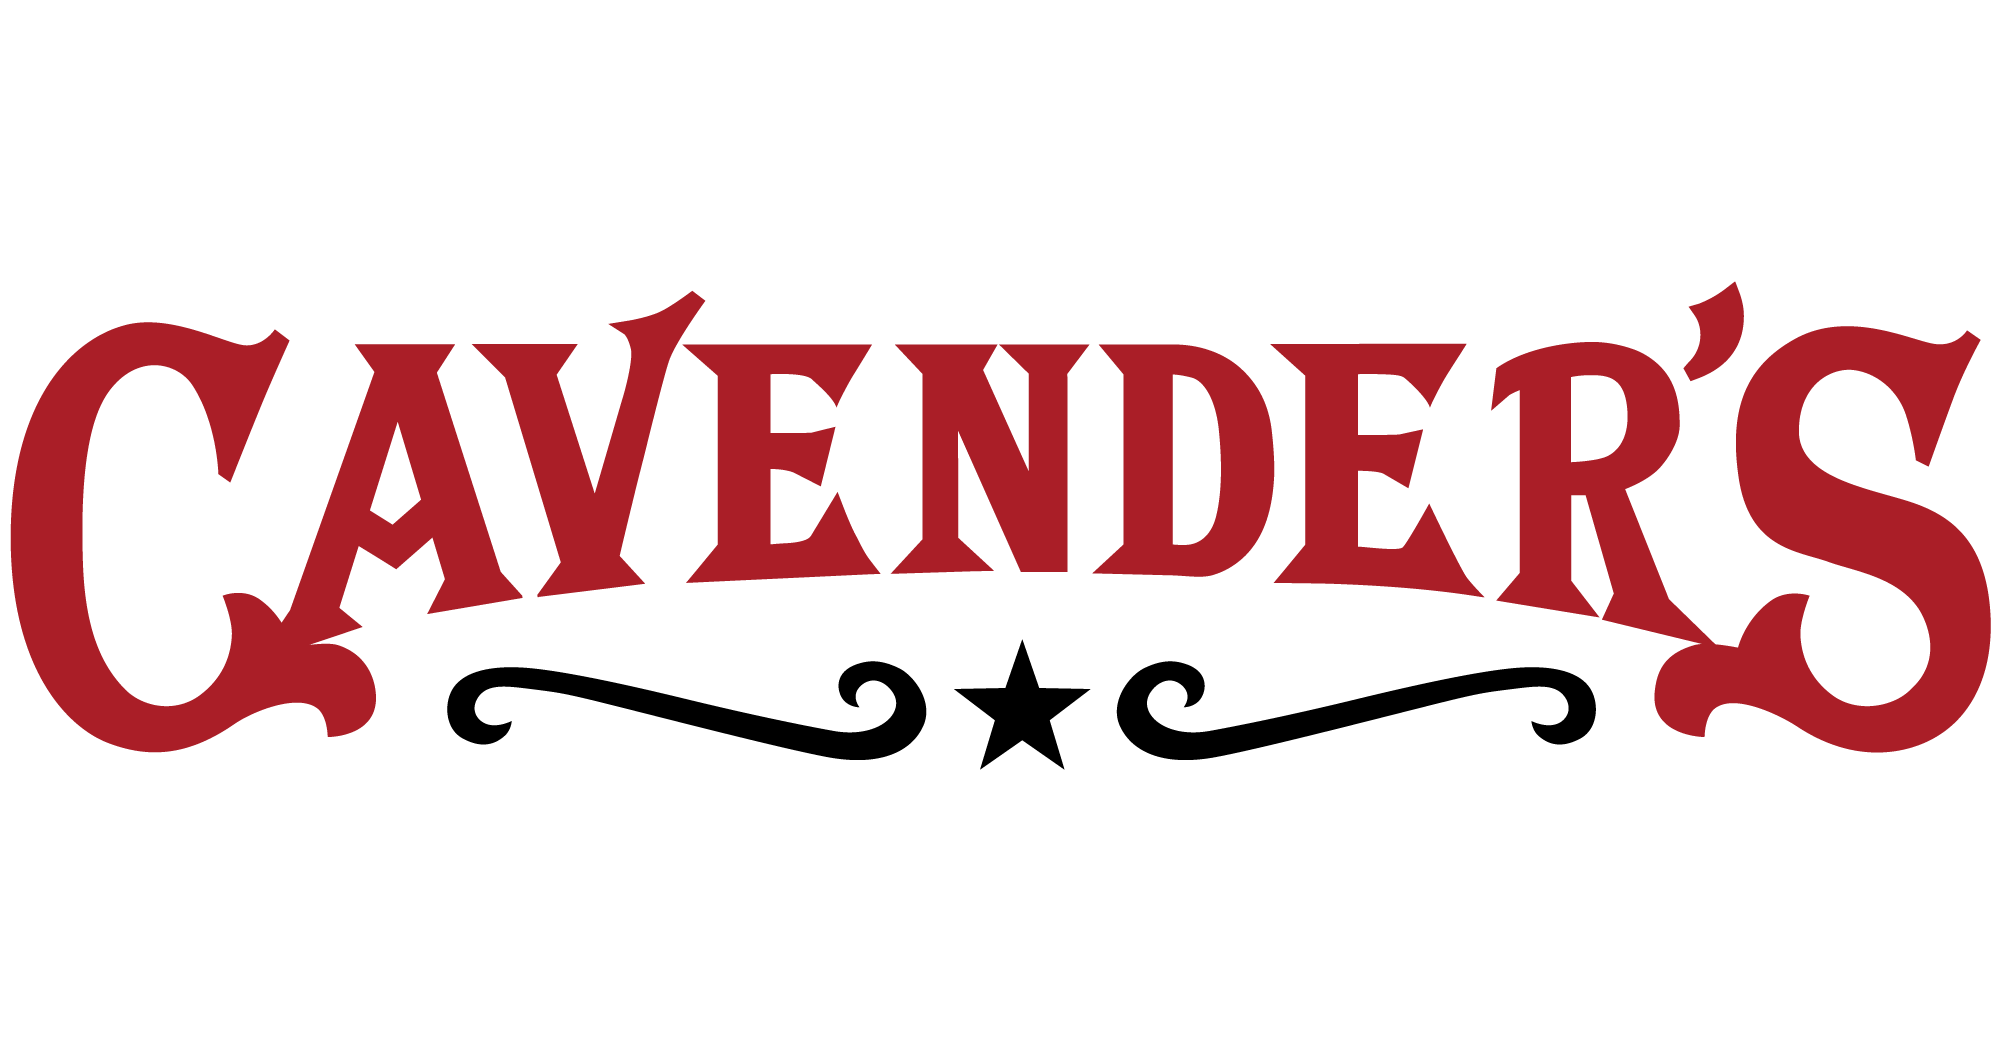 Cavenders_logo_2000x1050